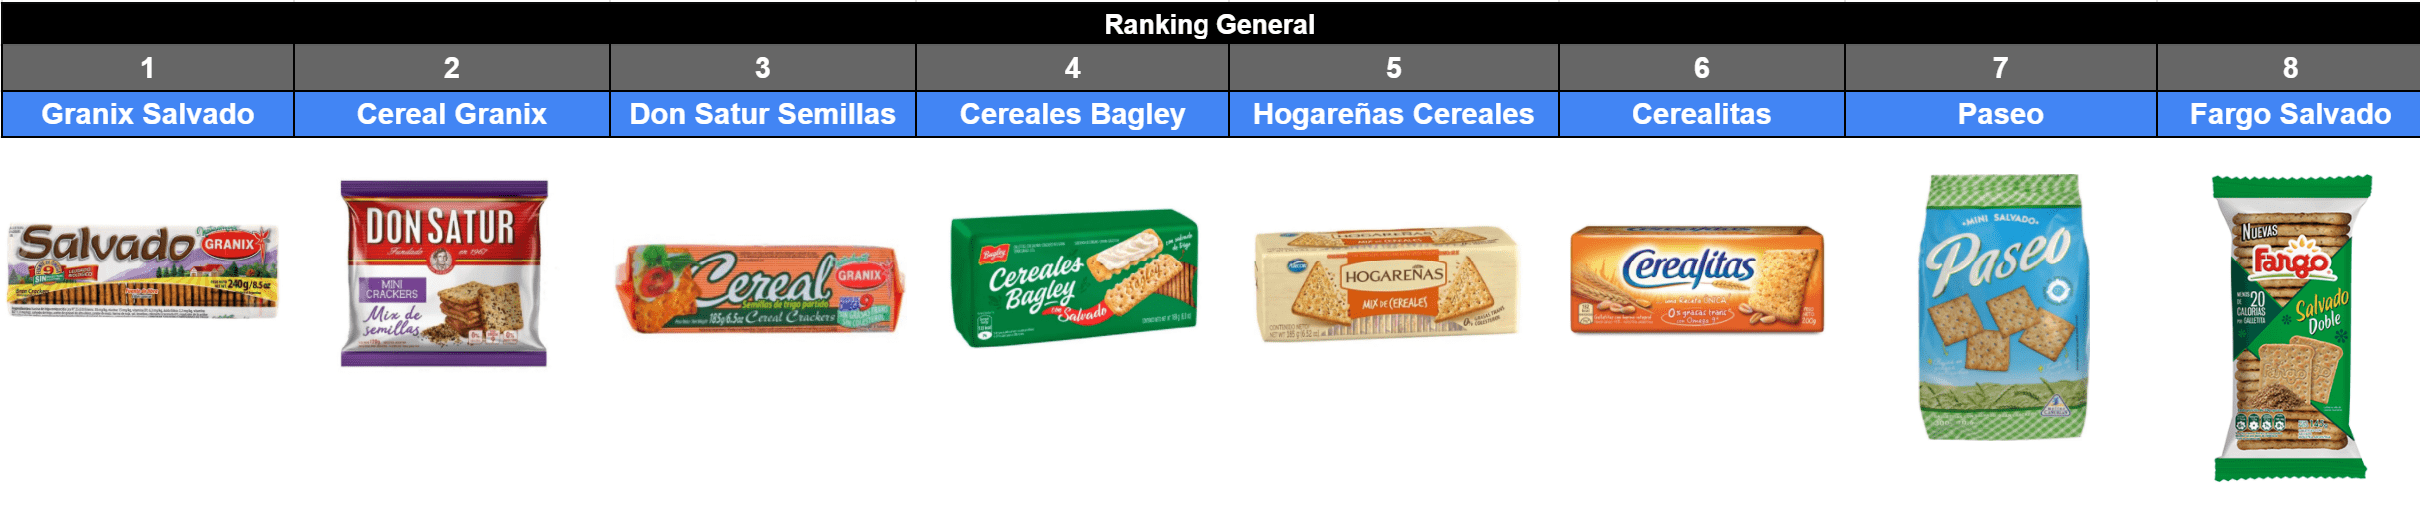 Ranking-General-galletitas